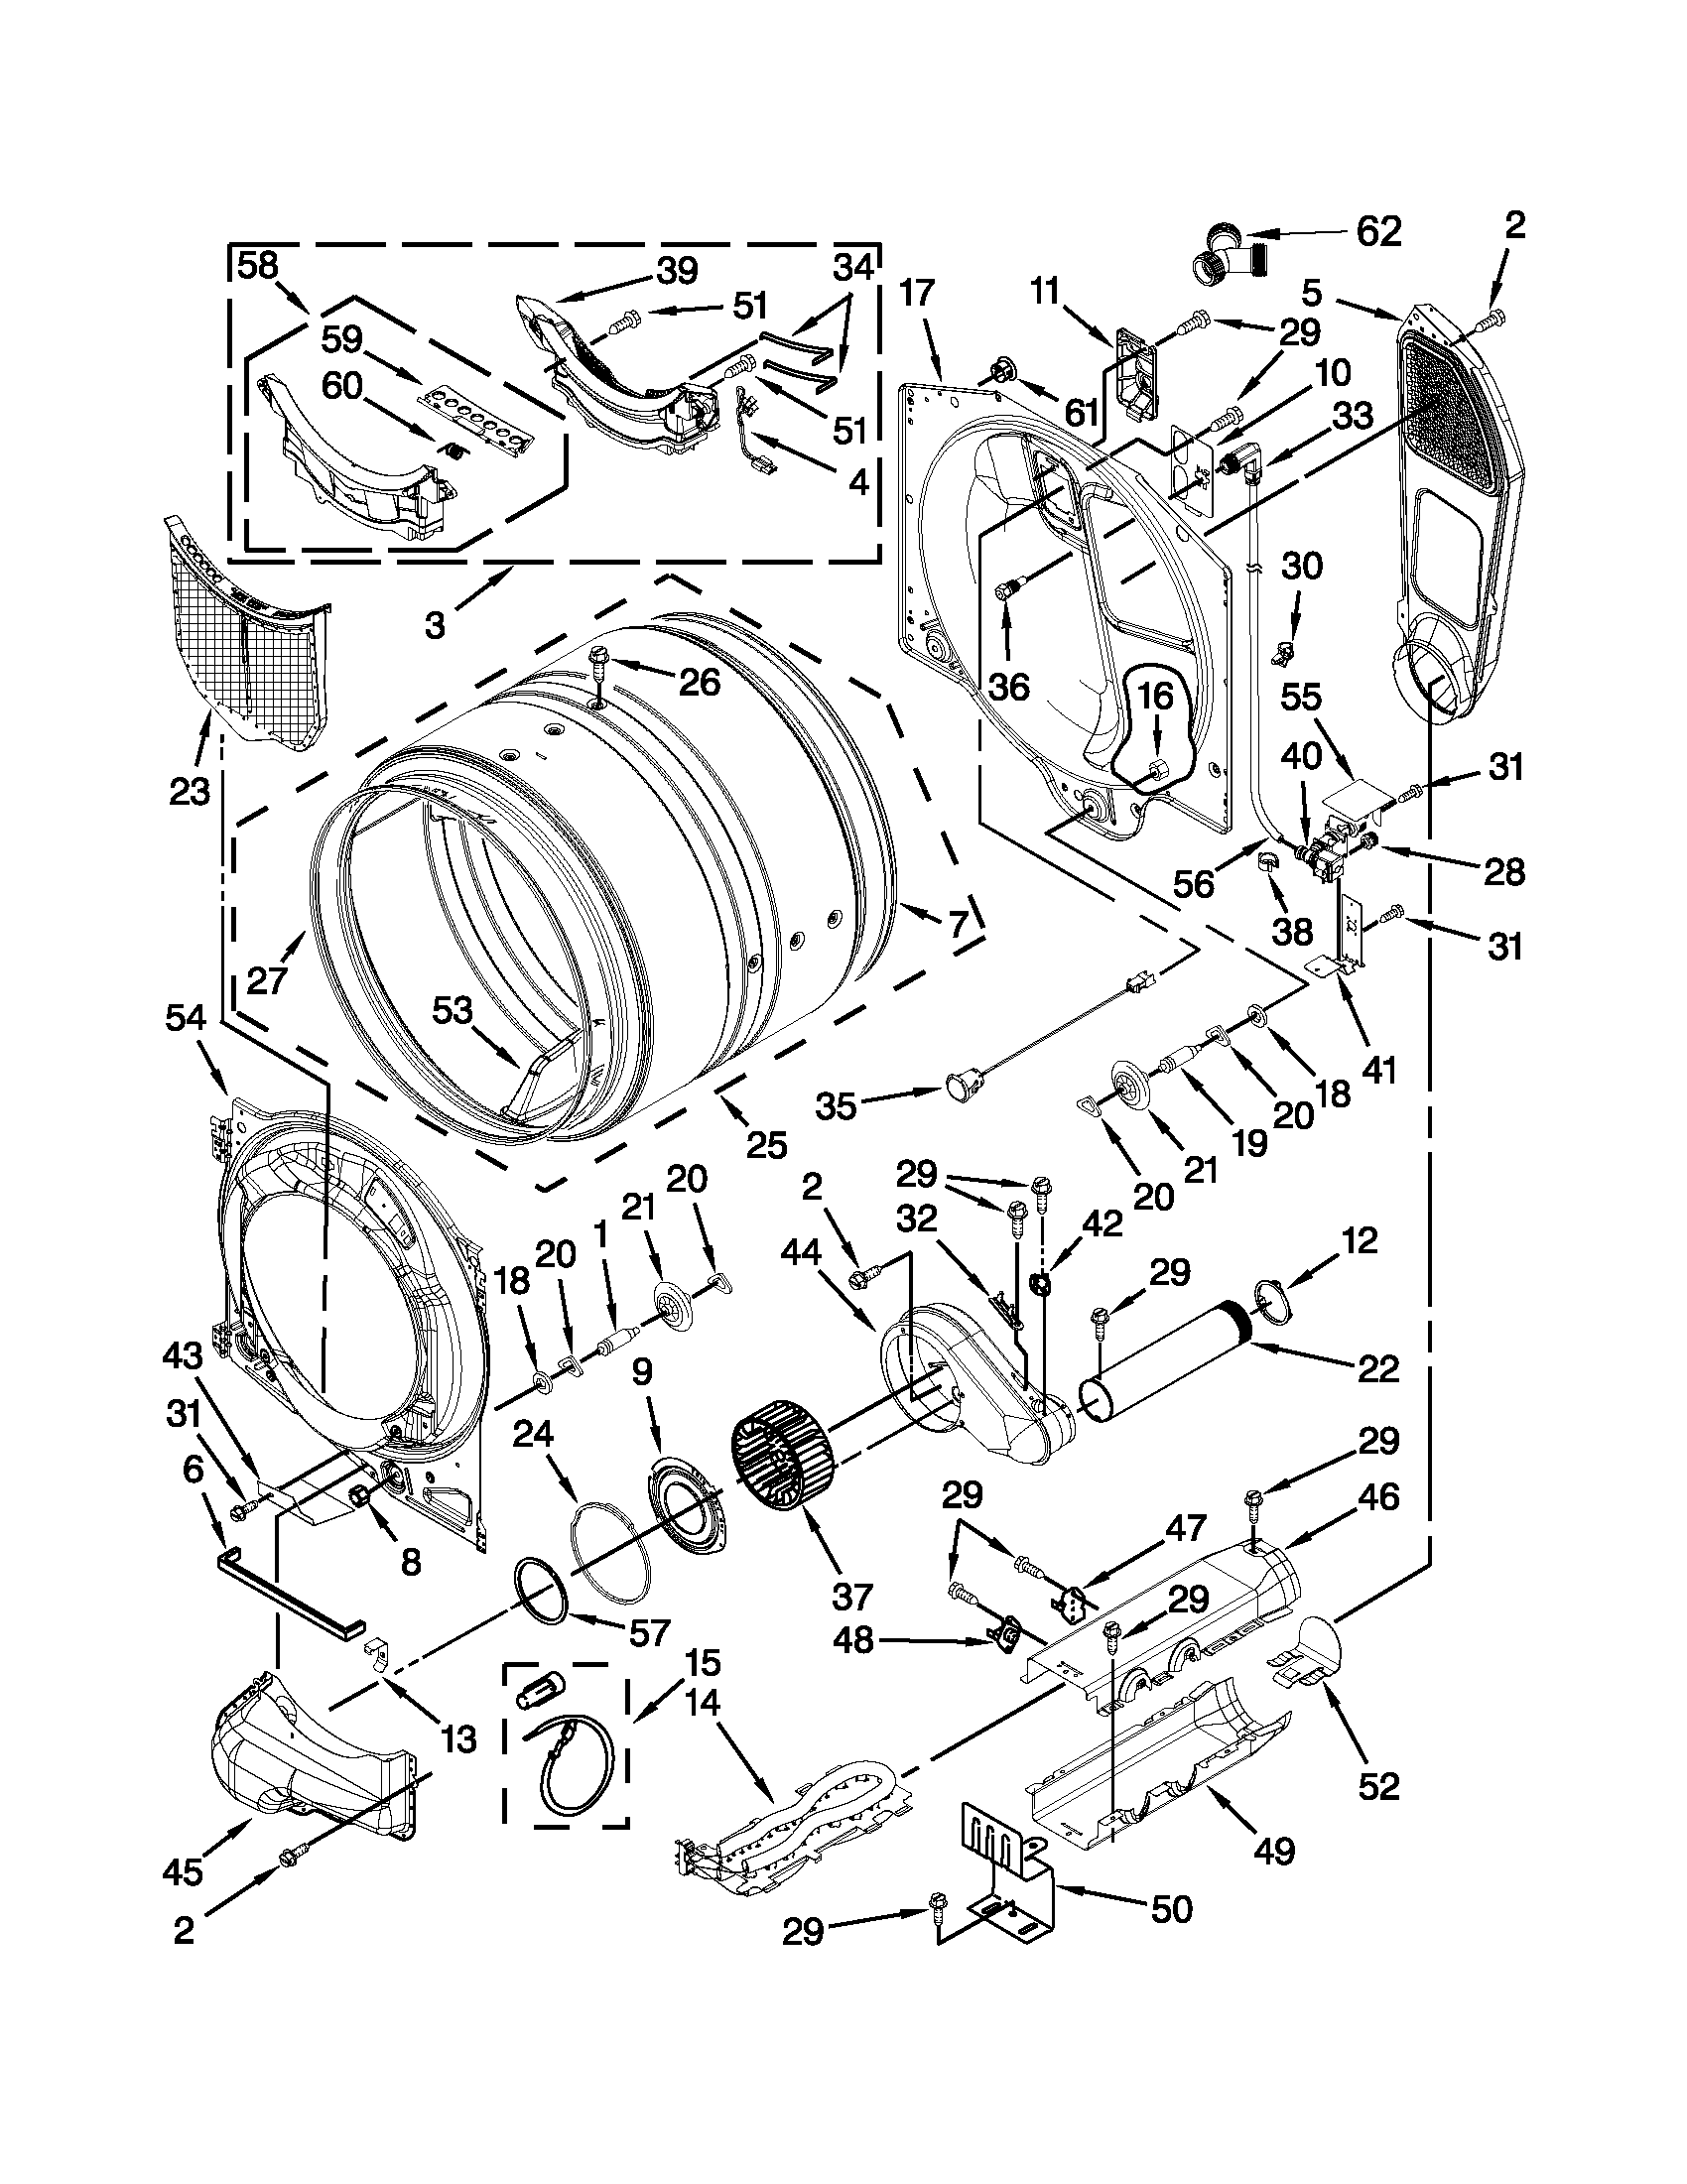 Whirlpool Dryer 4 Prong Wiring Diagram